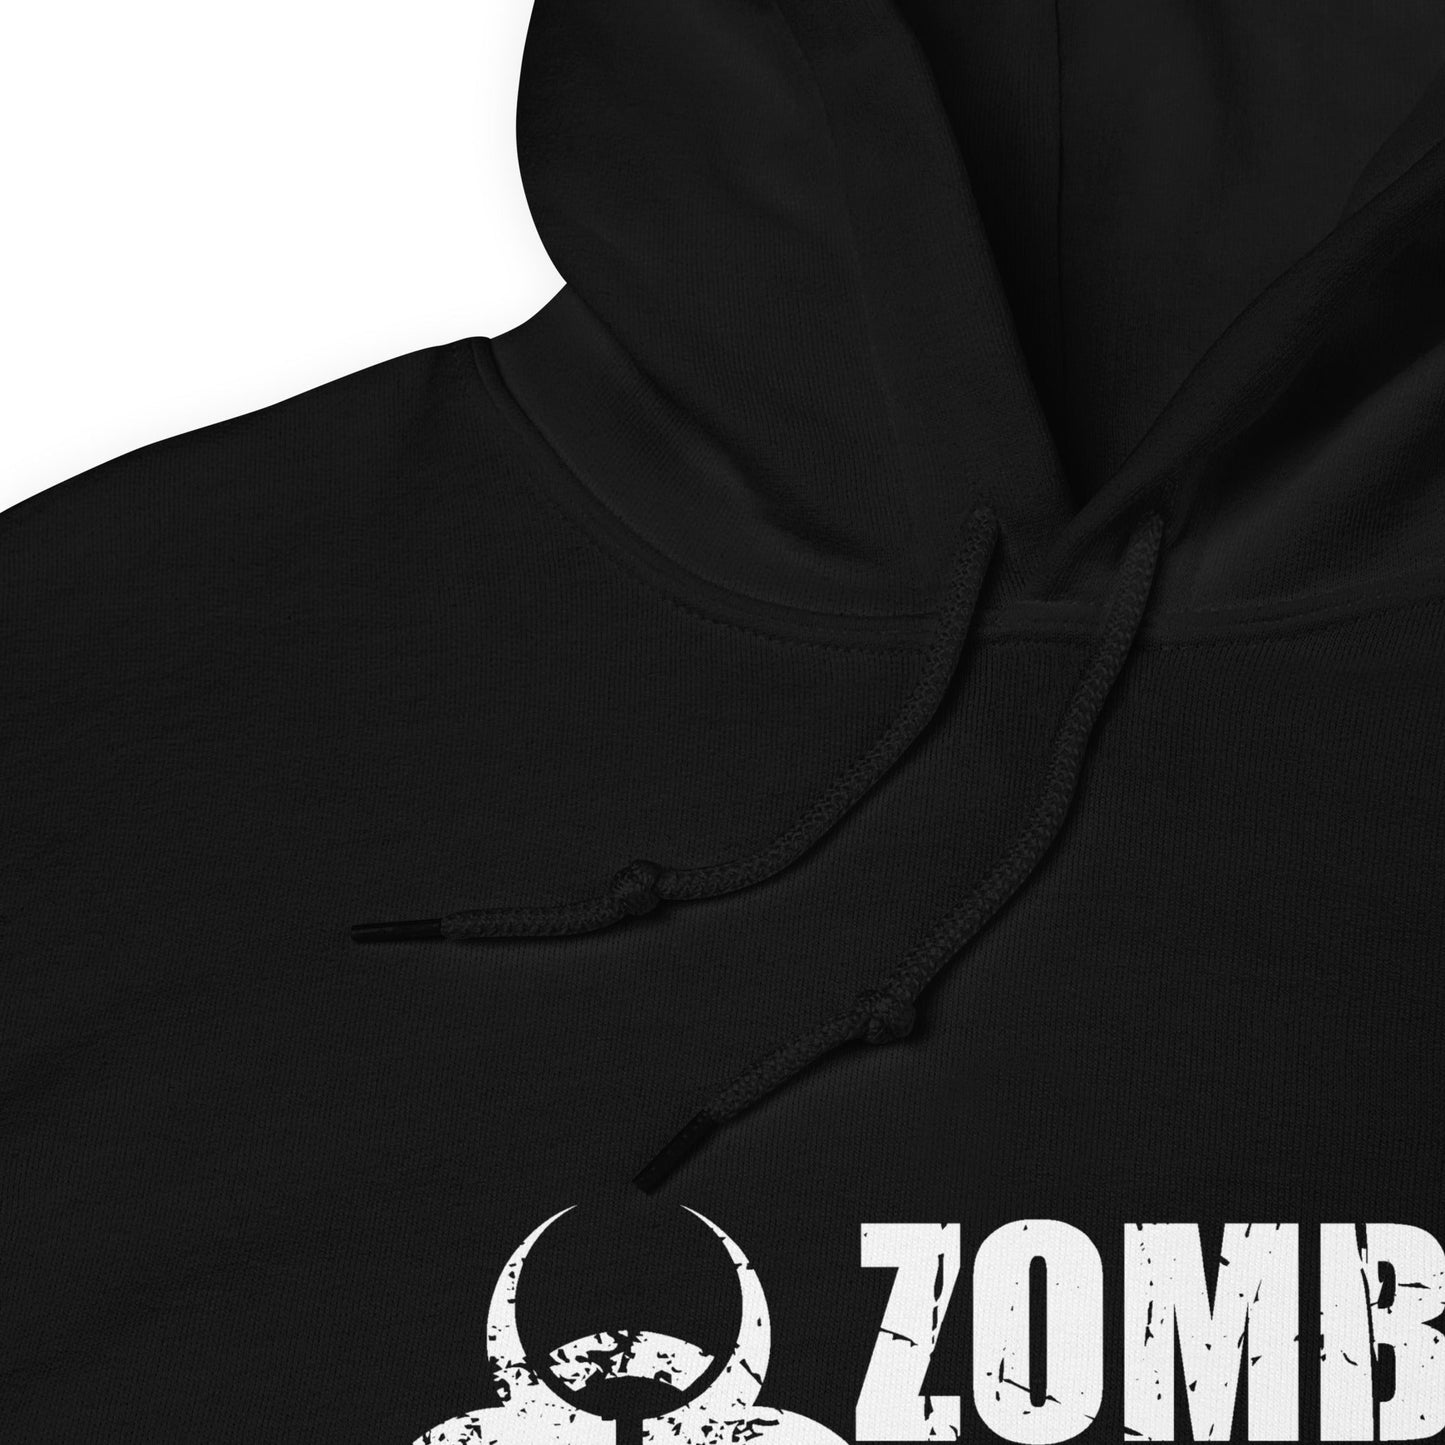 Creepy Ville - Zombie Hunter – Premium Unisex Hoodie